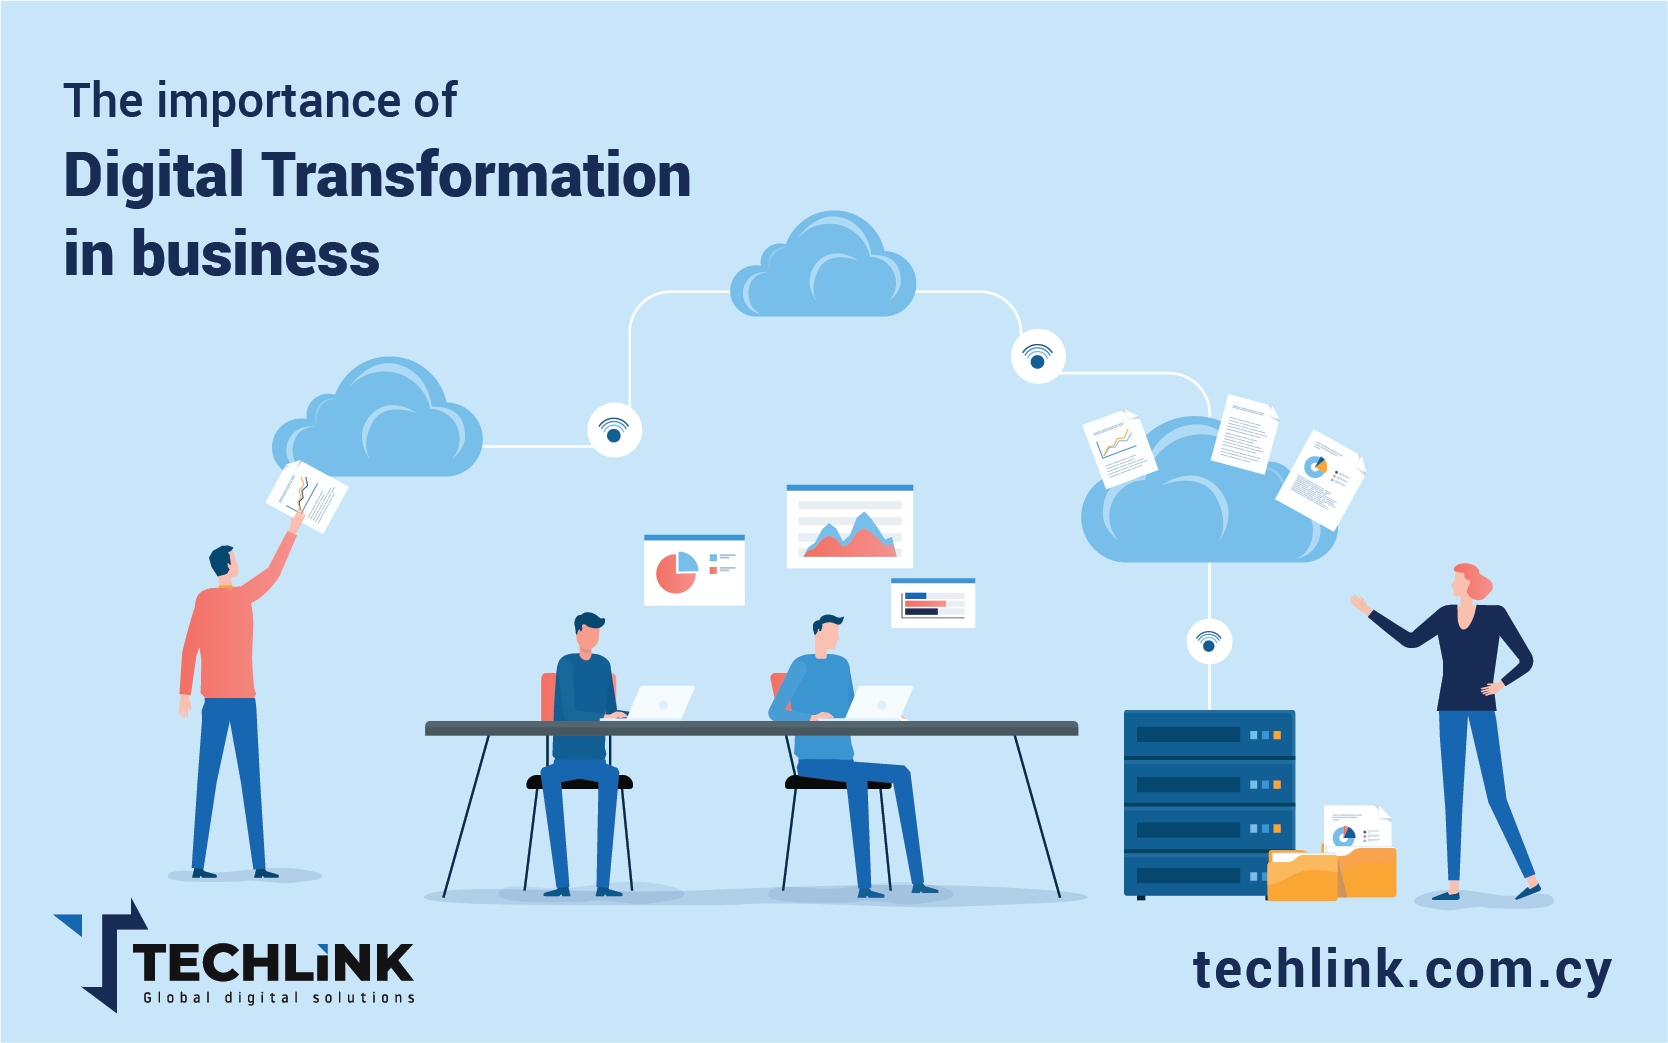 Techlink - The importance of digital trnasformation